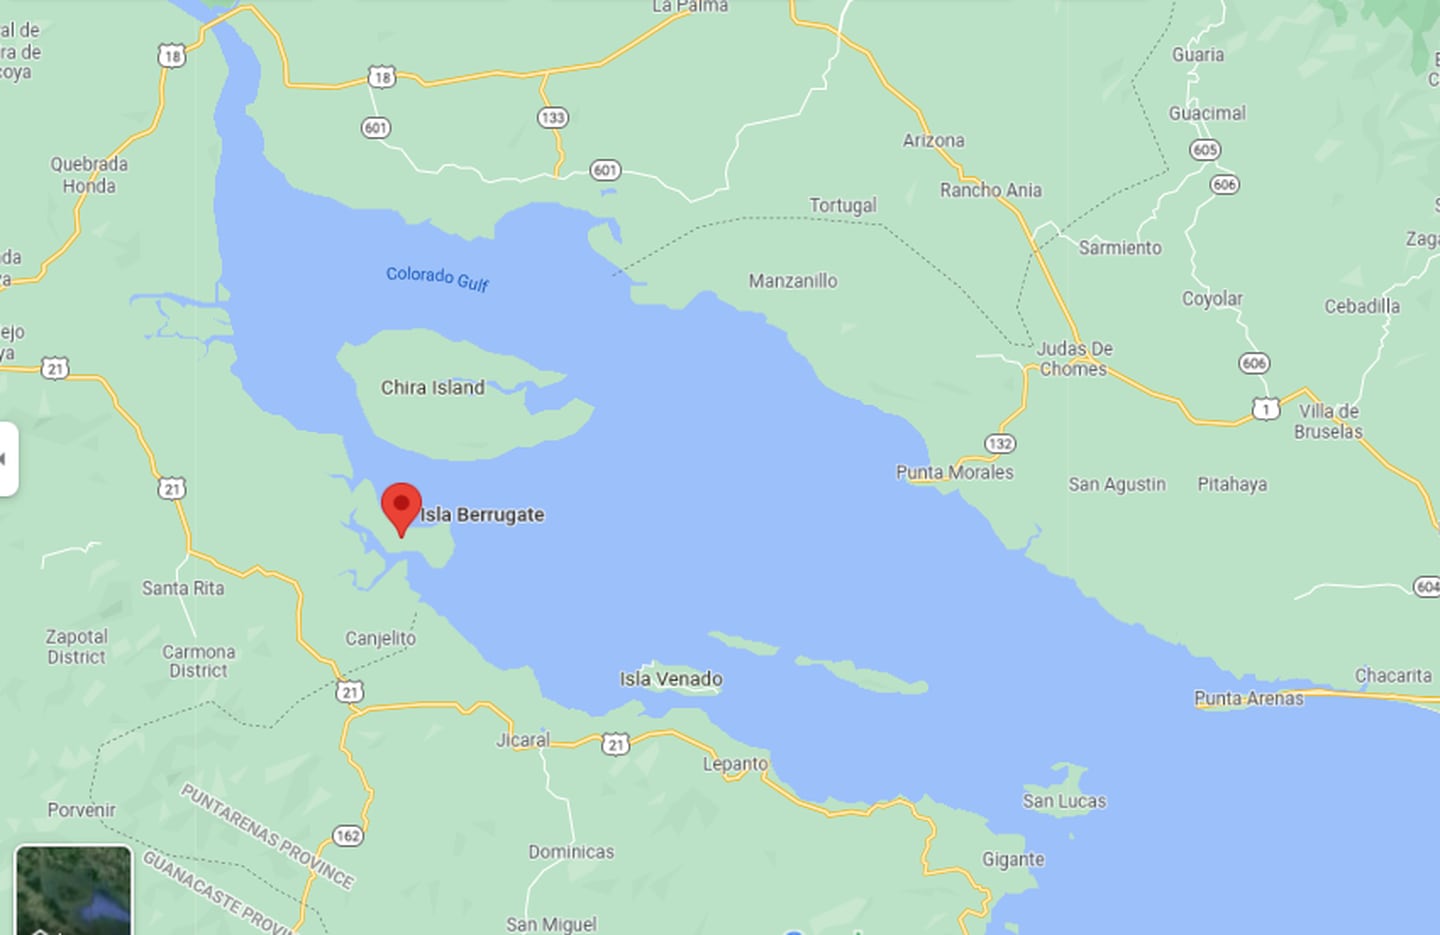 La isla Berrugate esta muy cerca de Chira, en el golfo de Nicoya. Imagen: google maps.